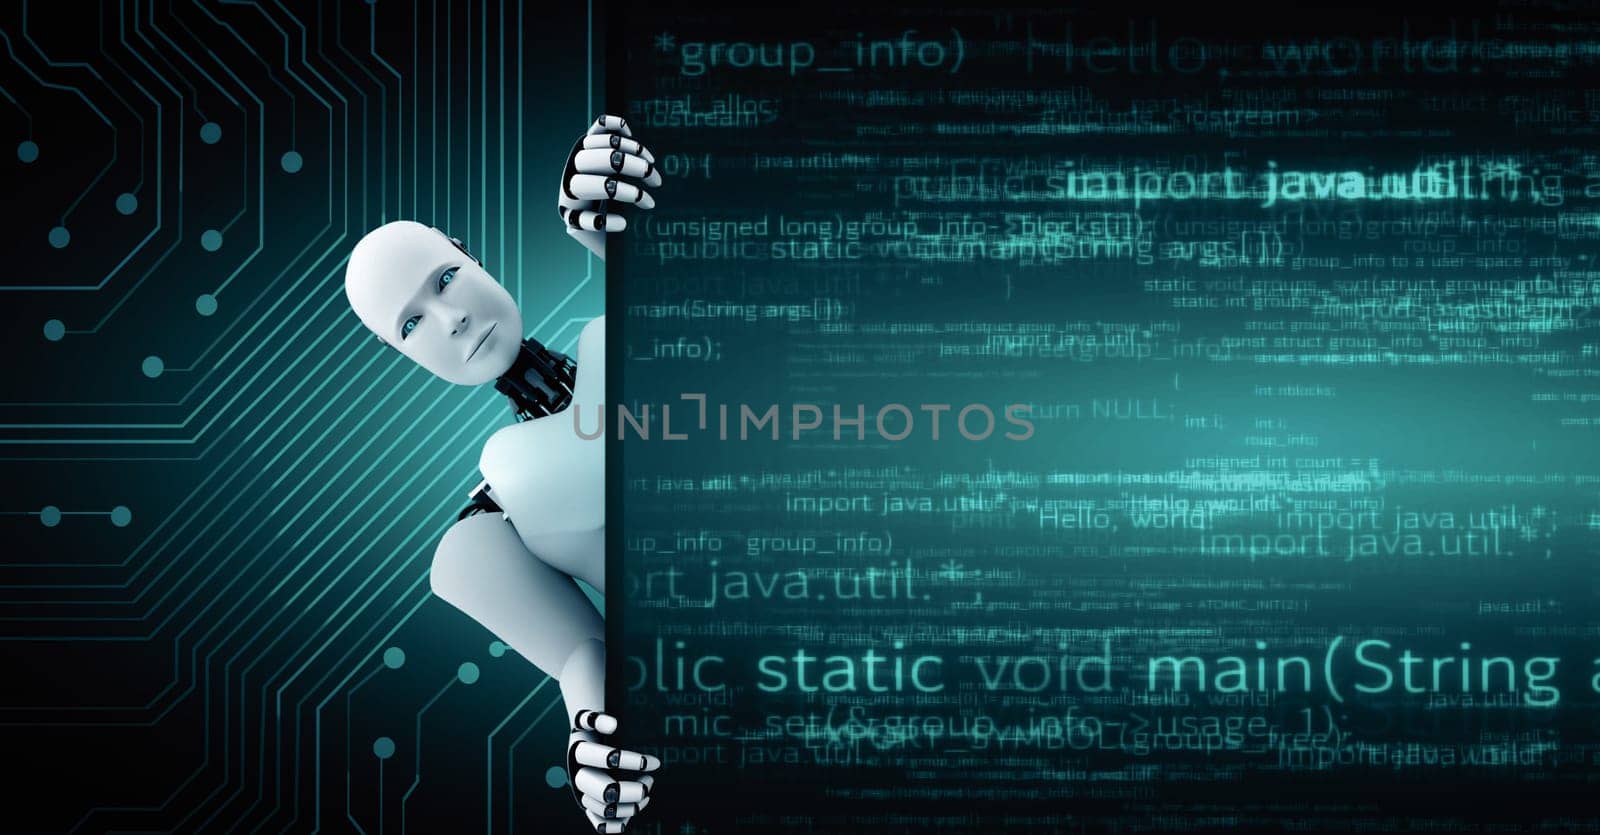 XAI Futuristic robot artificial intelligence huminoid AI programming coding by biancoblue